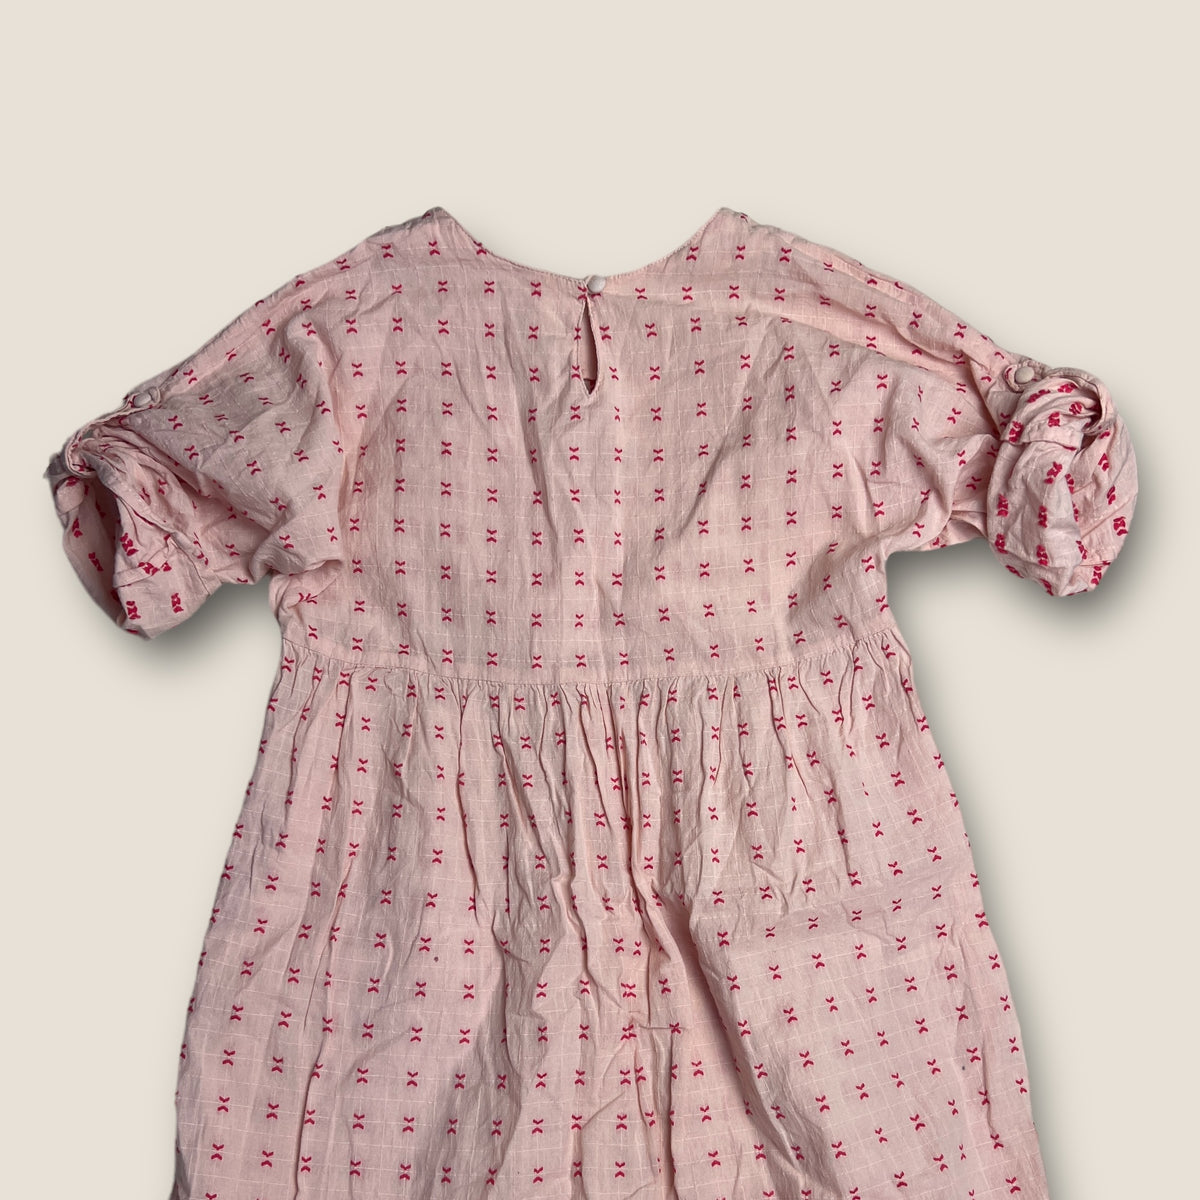 Pierro Tia Lune Organic Dress size 8-10 years